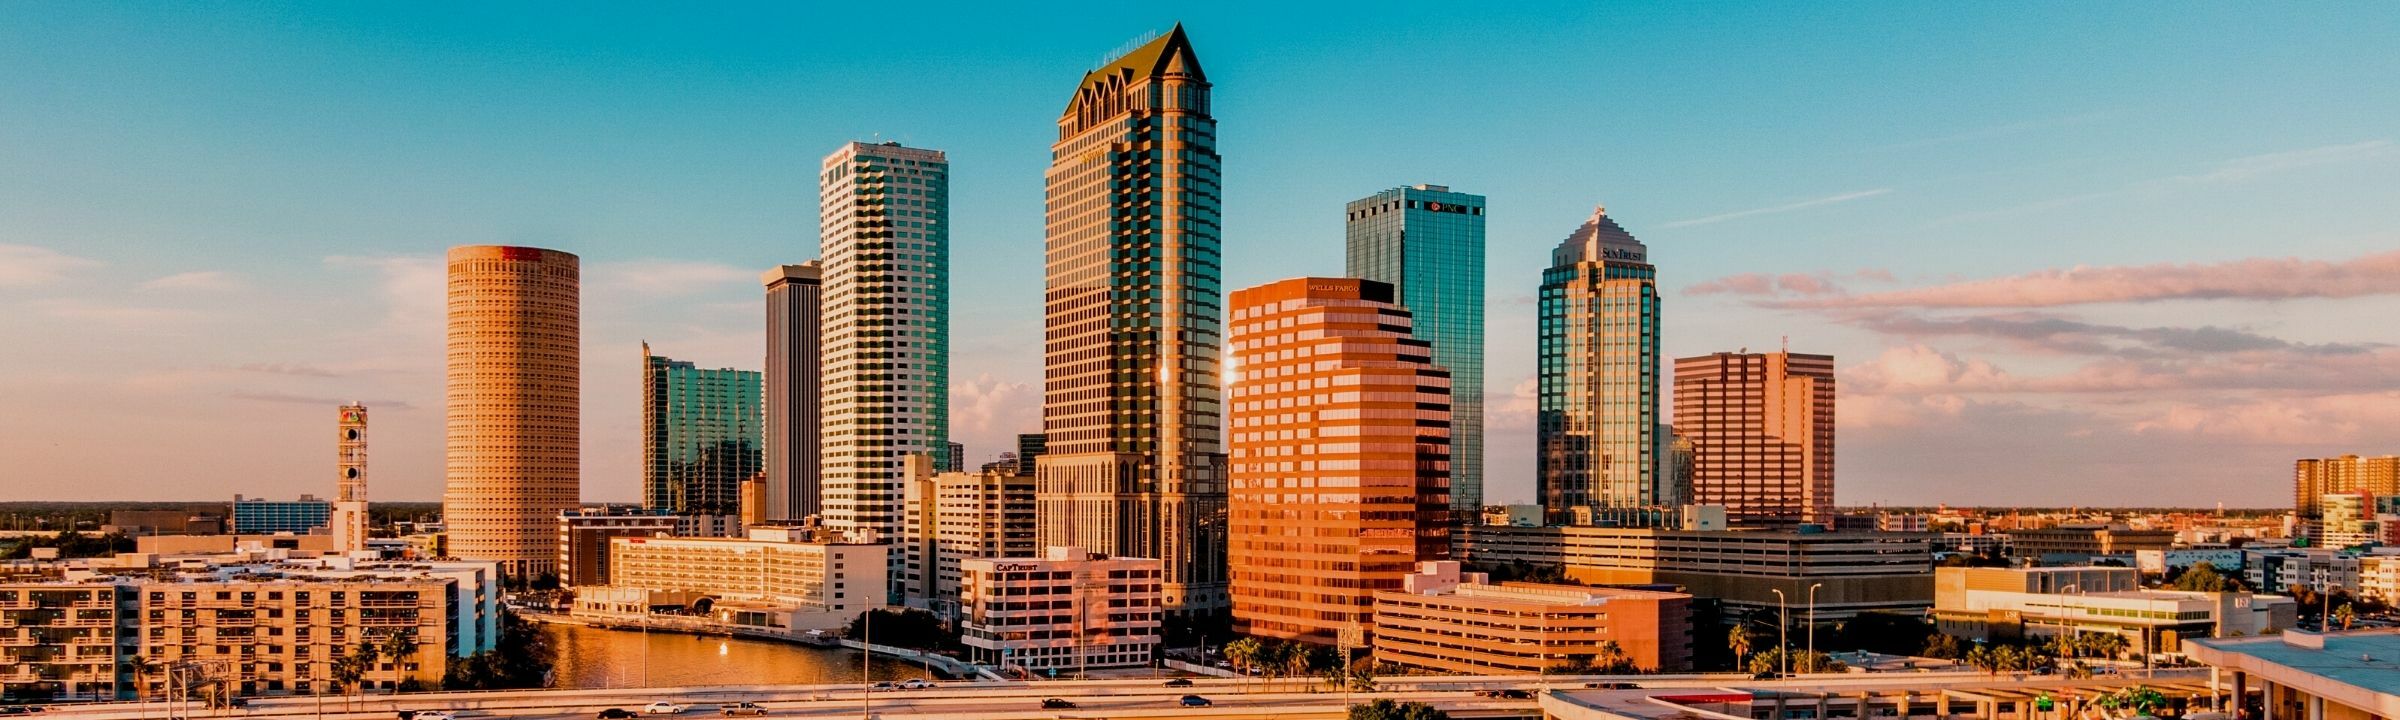 Panoramic view of downtown Tampa skyline